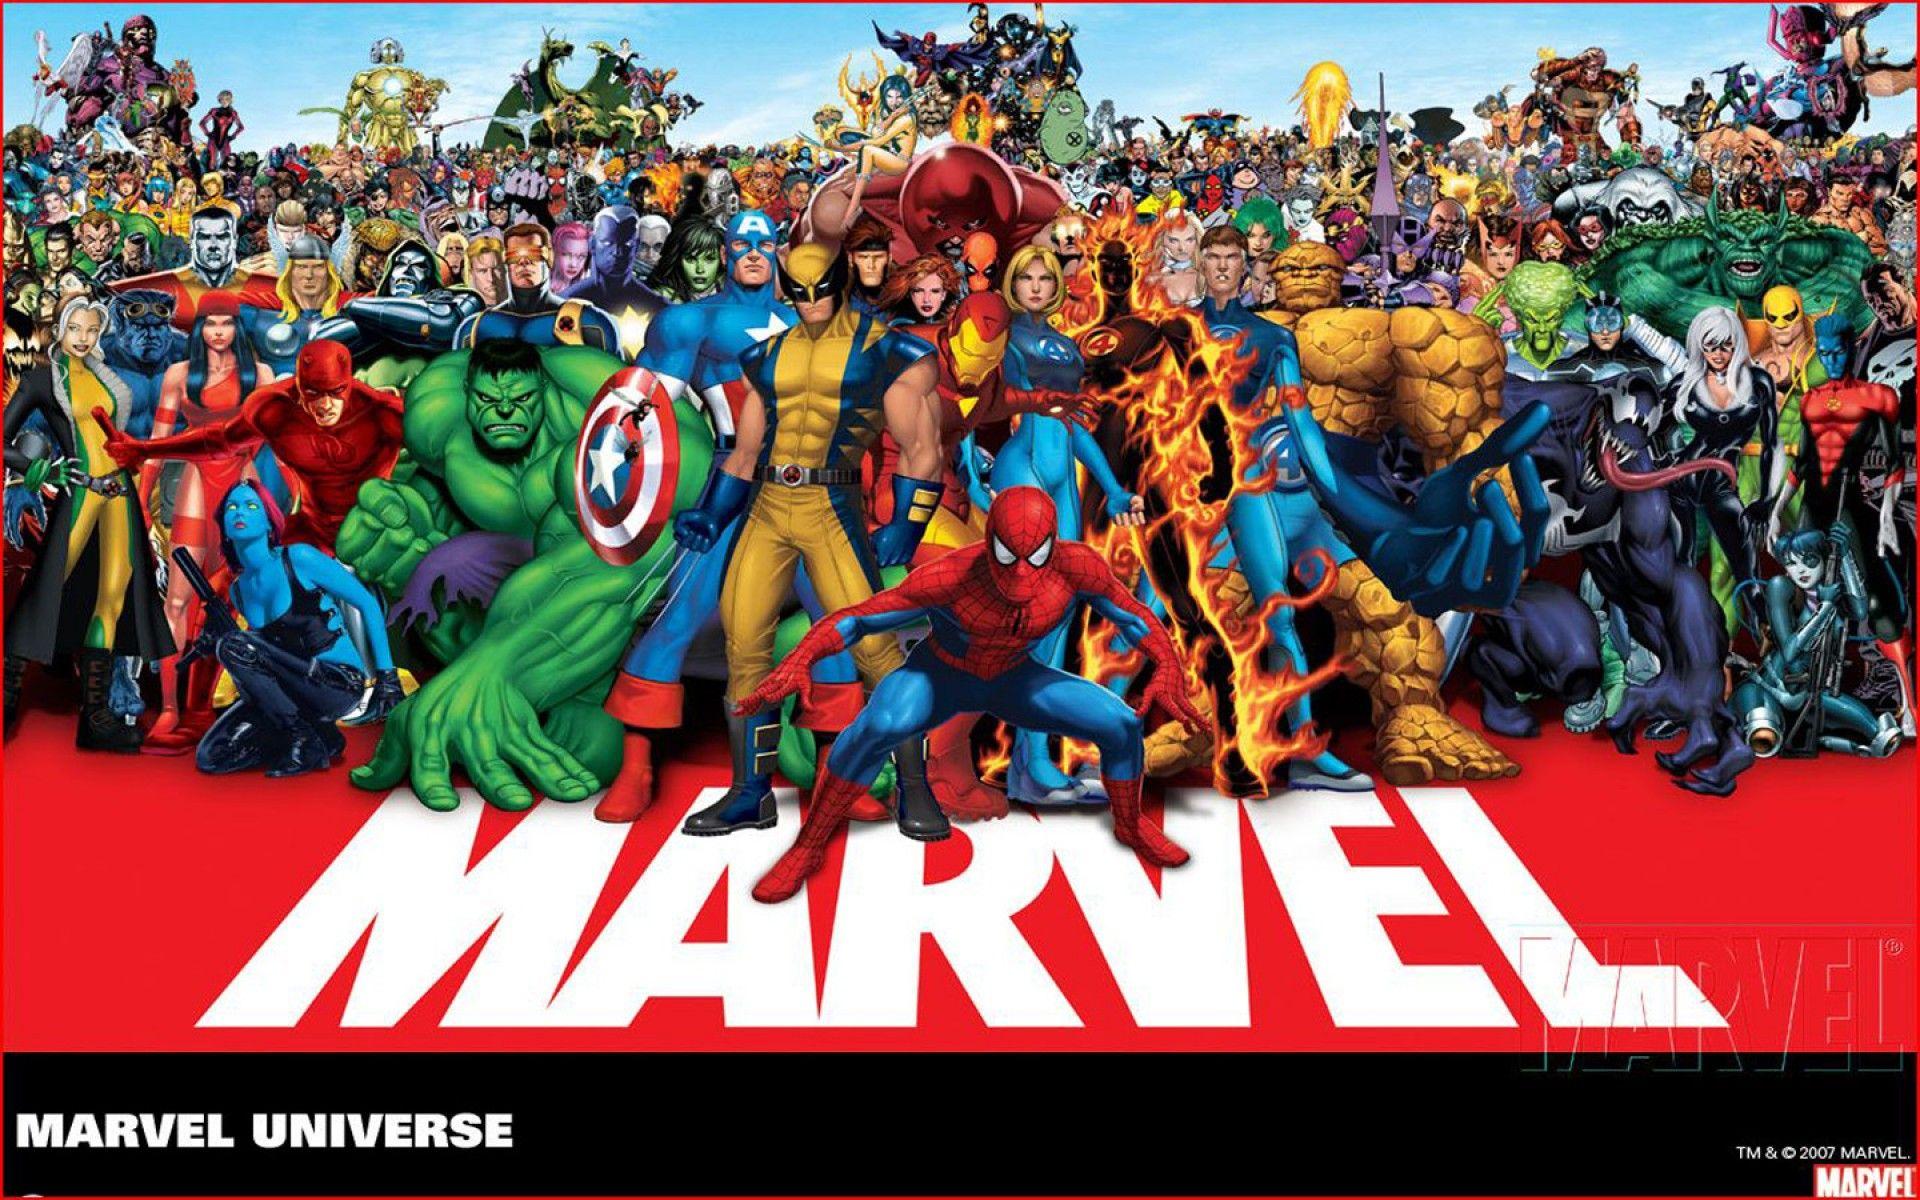 Download Marvel X Men Wolverine 2 Movie Wallpaper Image Free HD